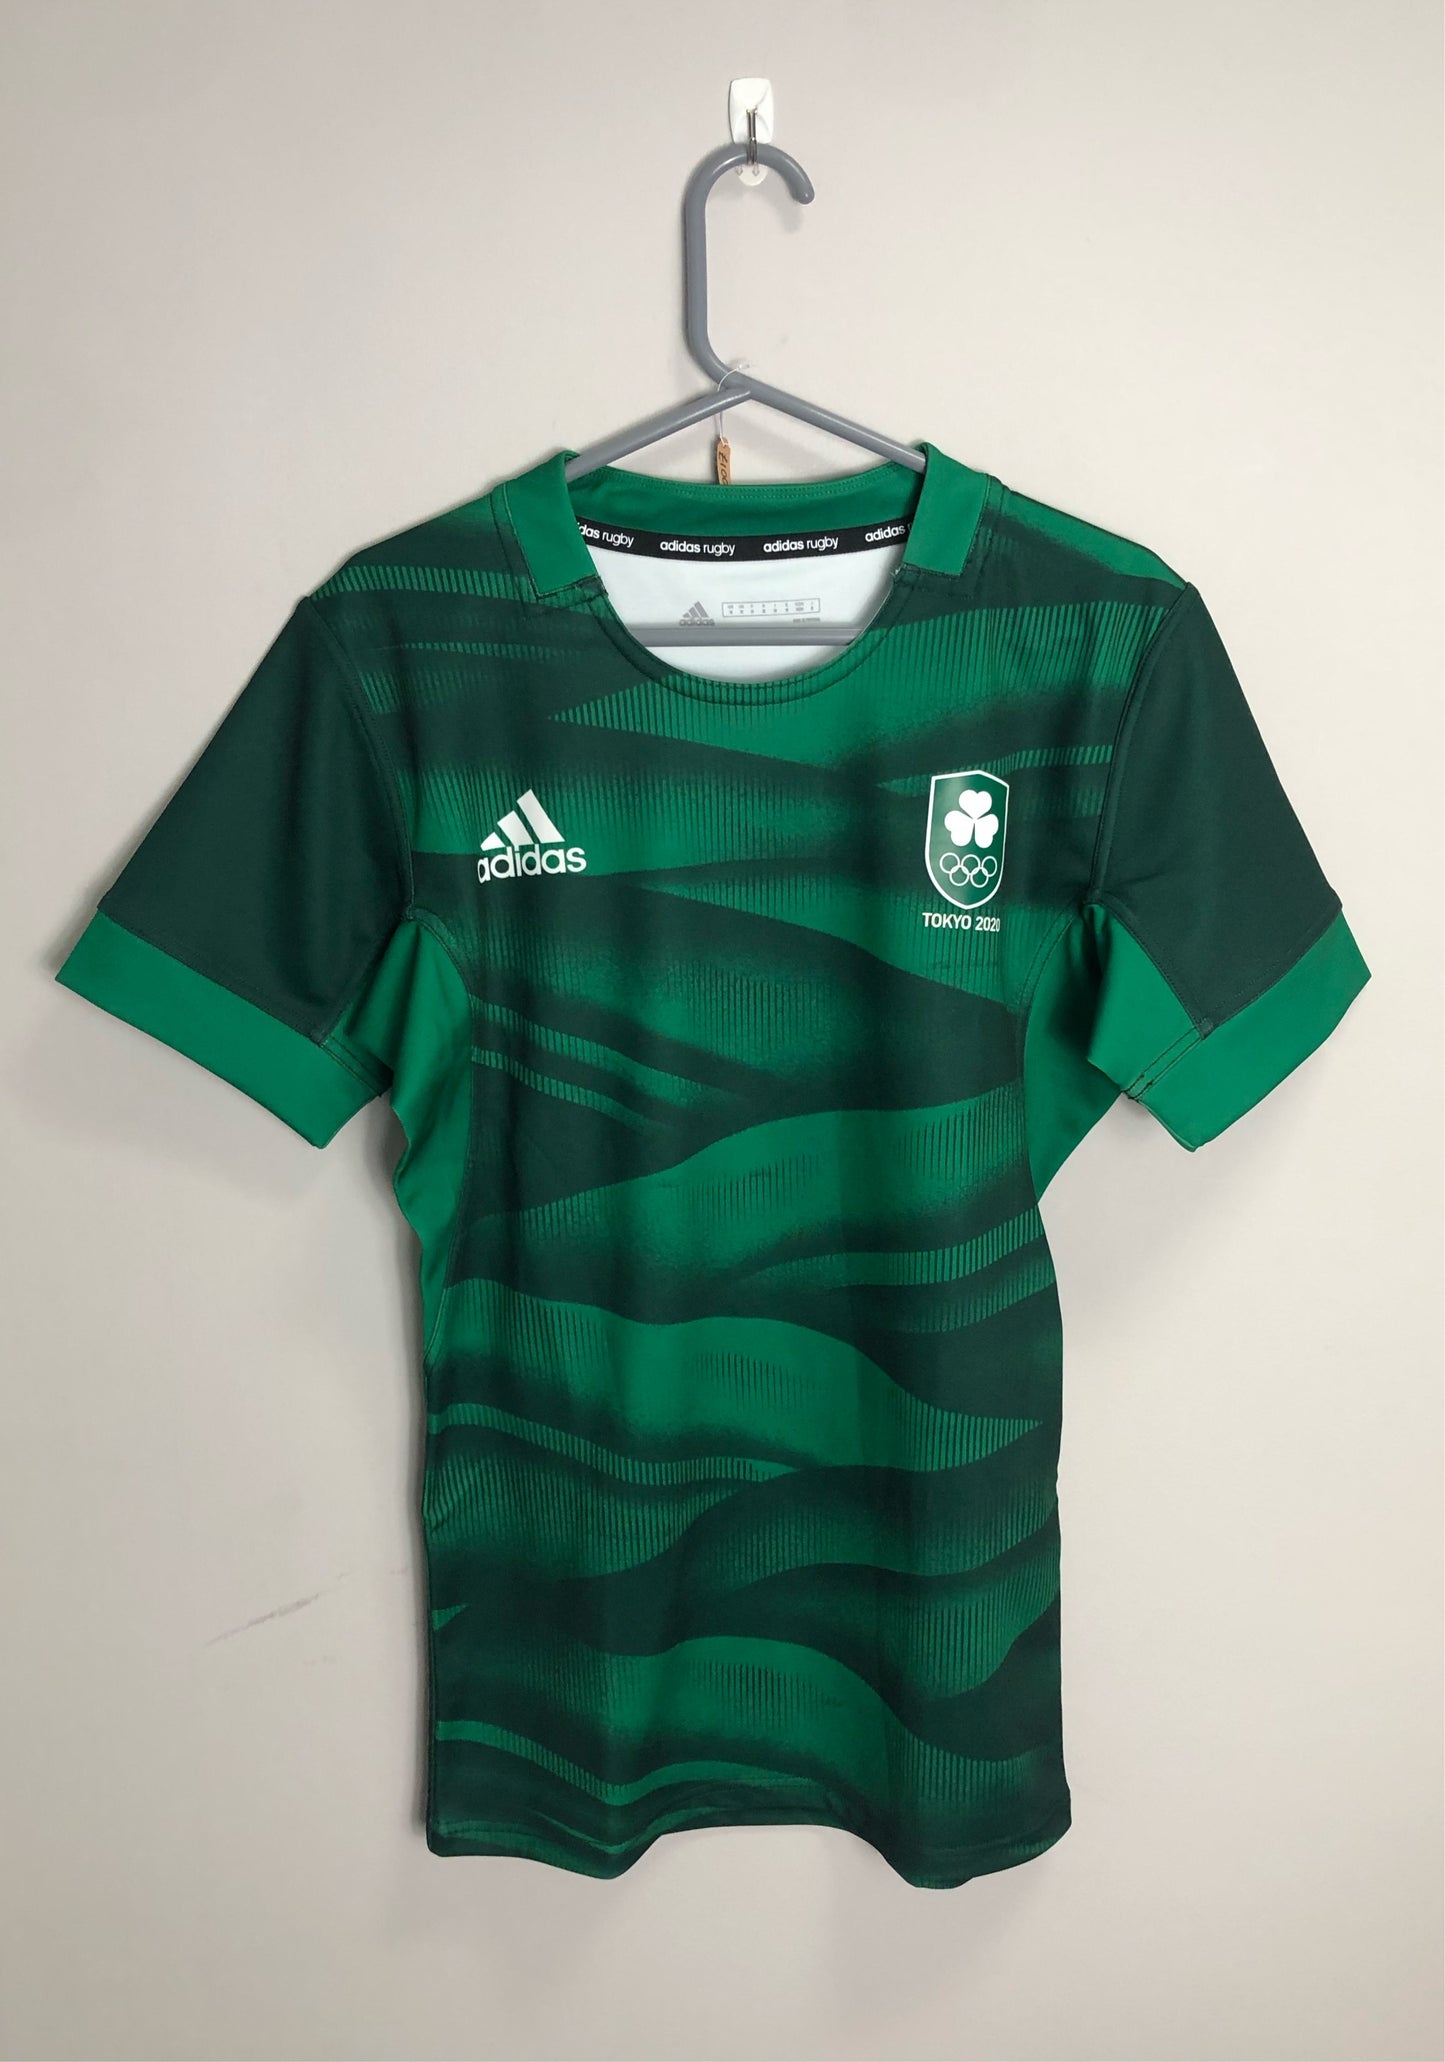 Ireland 7s Tokyo 2020 Olympics Shirt - 39” Chest - Large